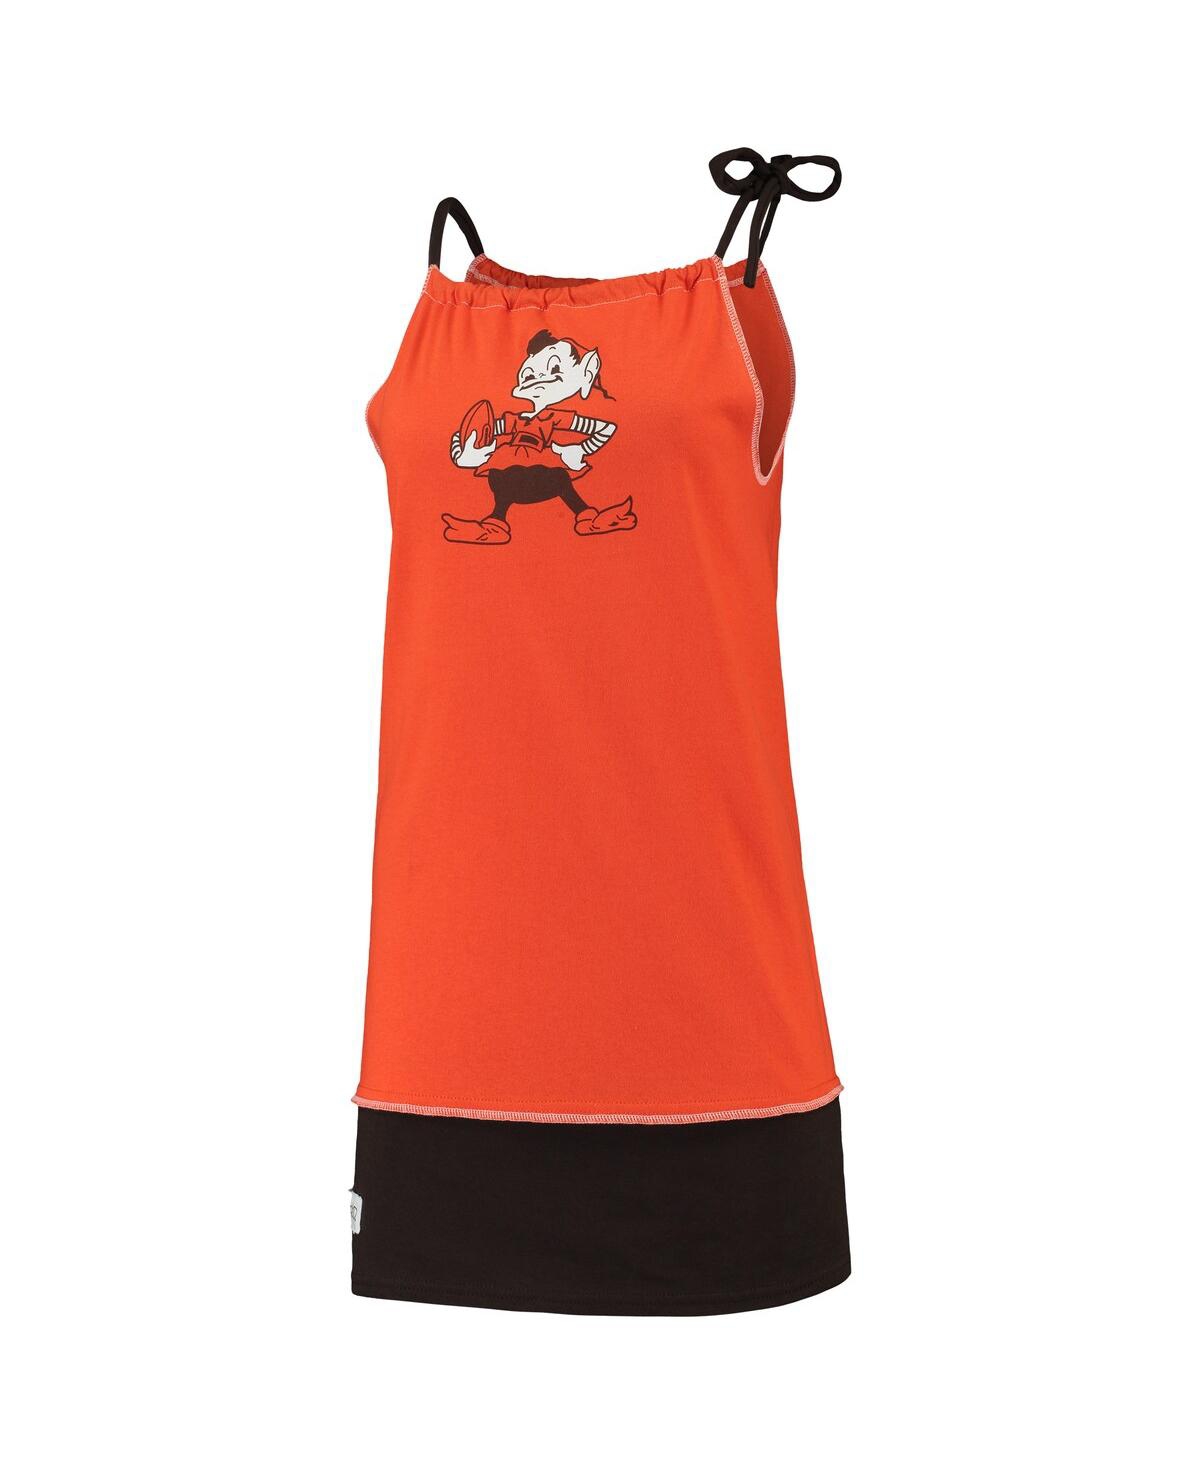 Shop Refried Apparel Women's  Orange Distressed Cleveland Browns Vintage-like Tank Dress